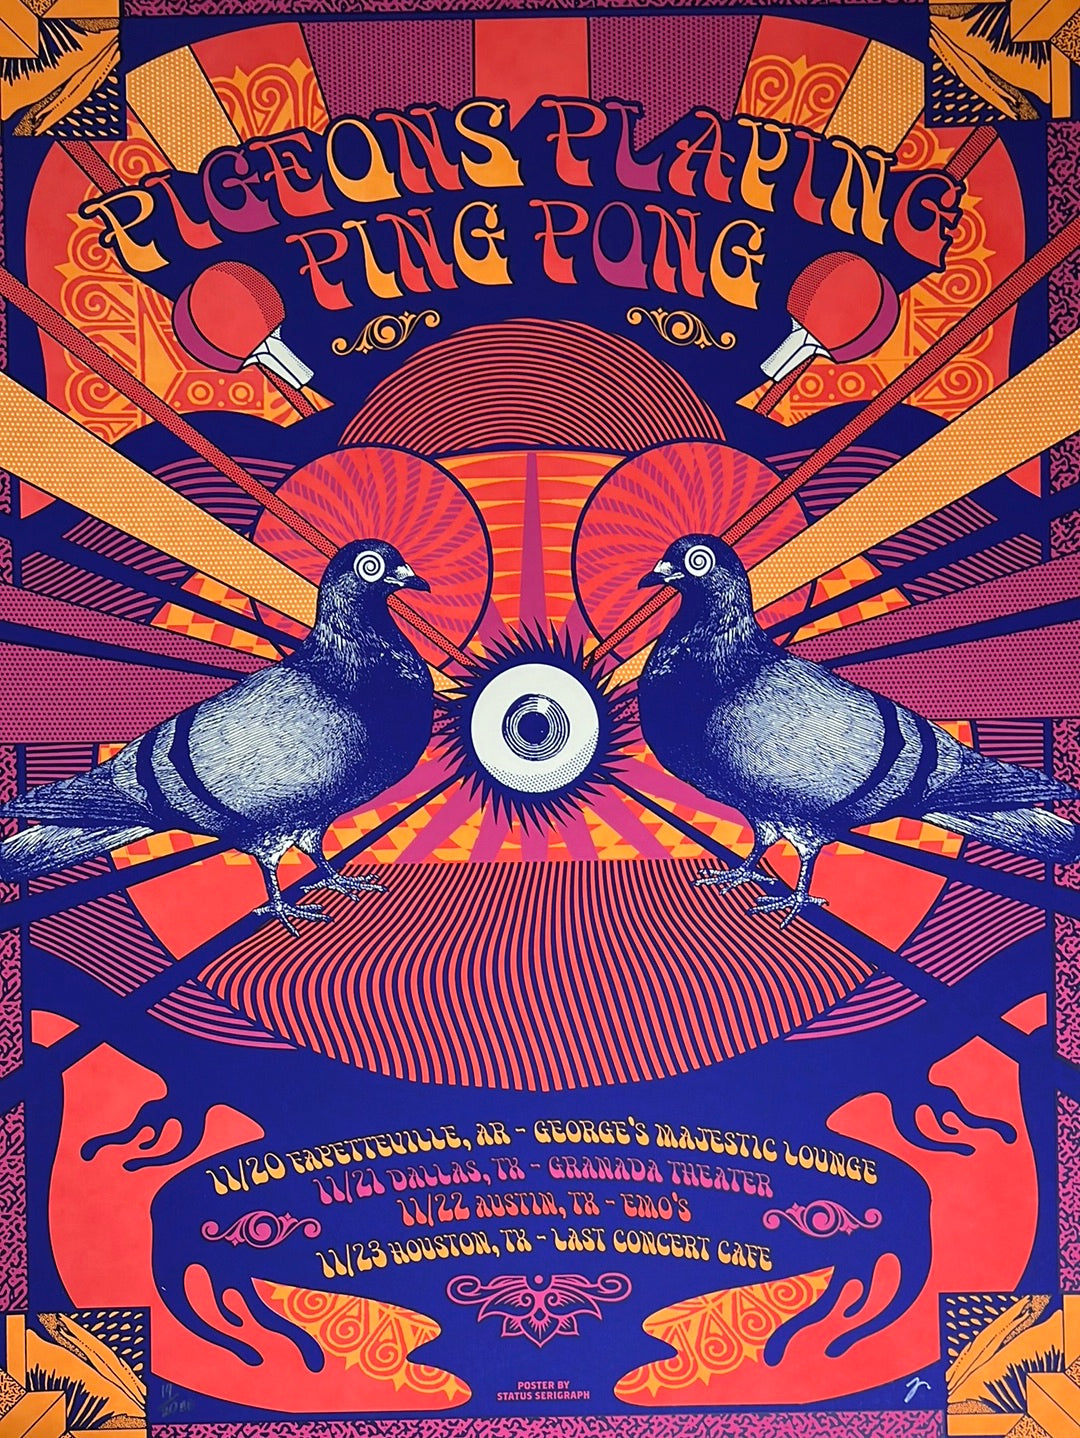 Pigeons Playing Ping Pong - 2019 Status Serigraph poster November Run ...